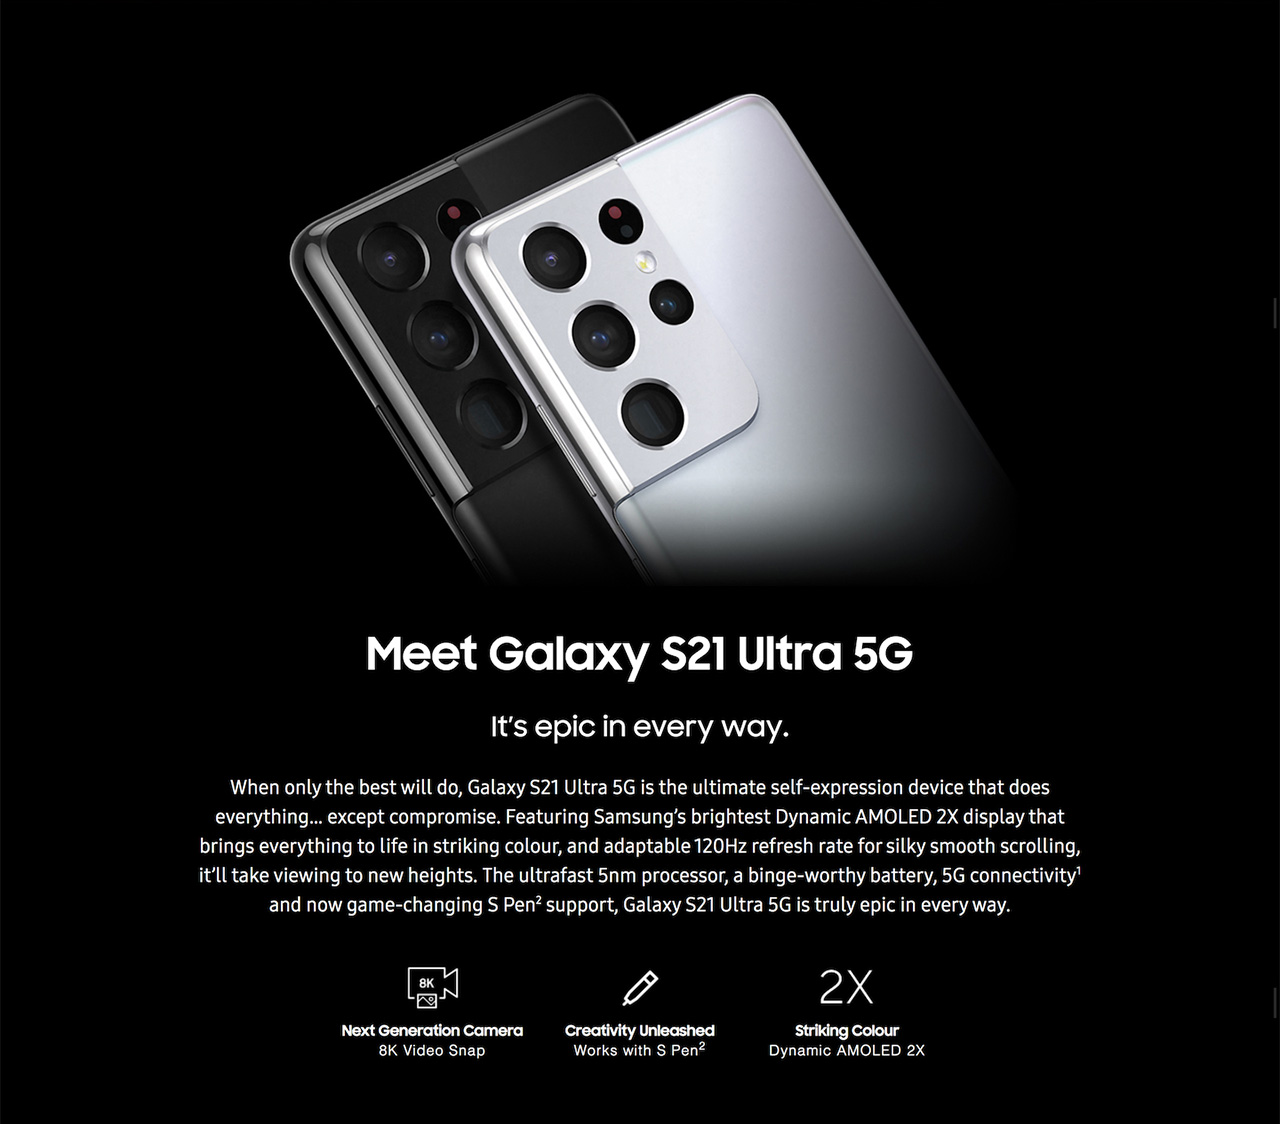 The Samsung Galaxy S21 Ultra 5G